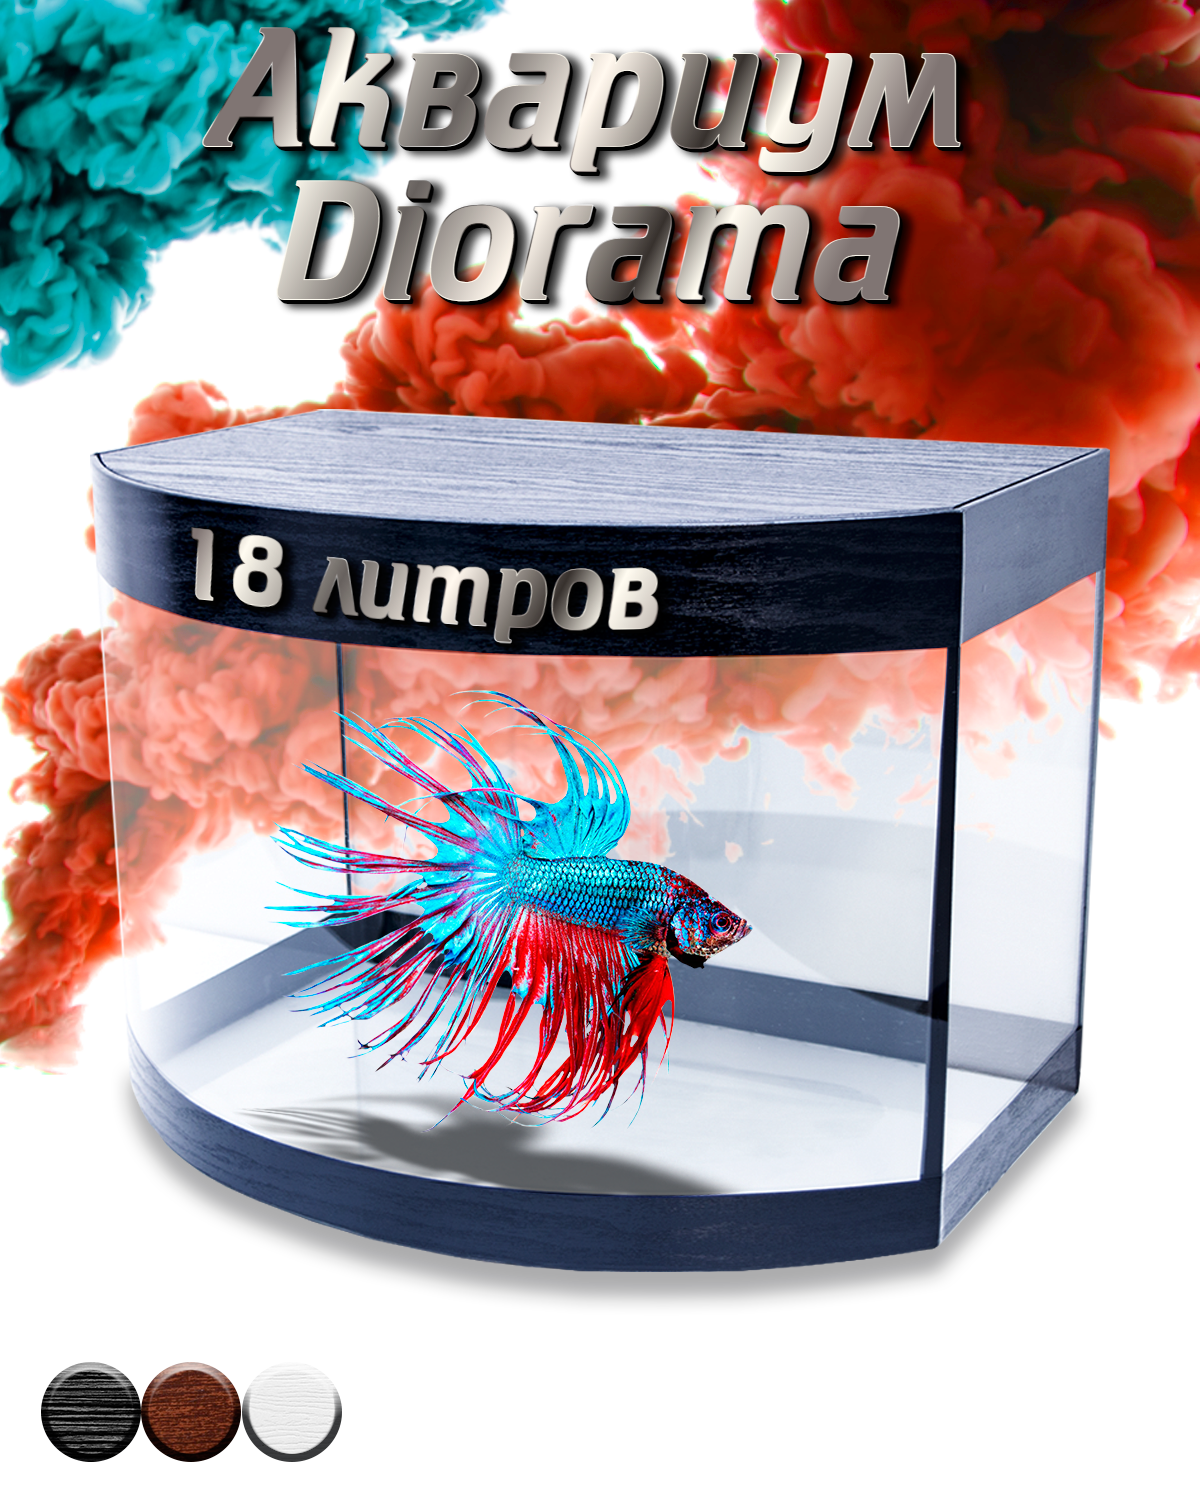 Аквариум для рыбок Diarama 18L Black Wood Edition